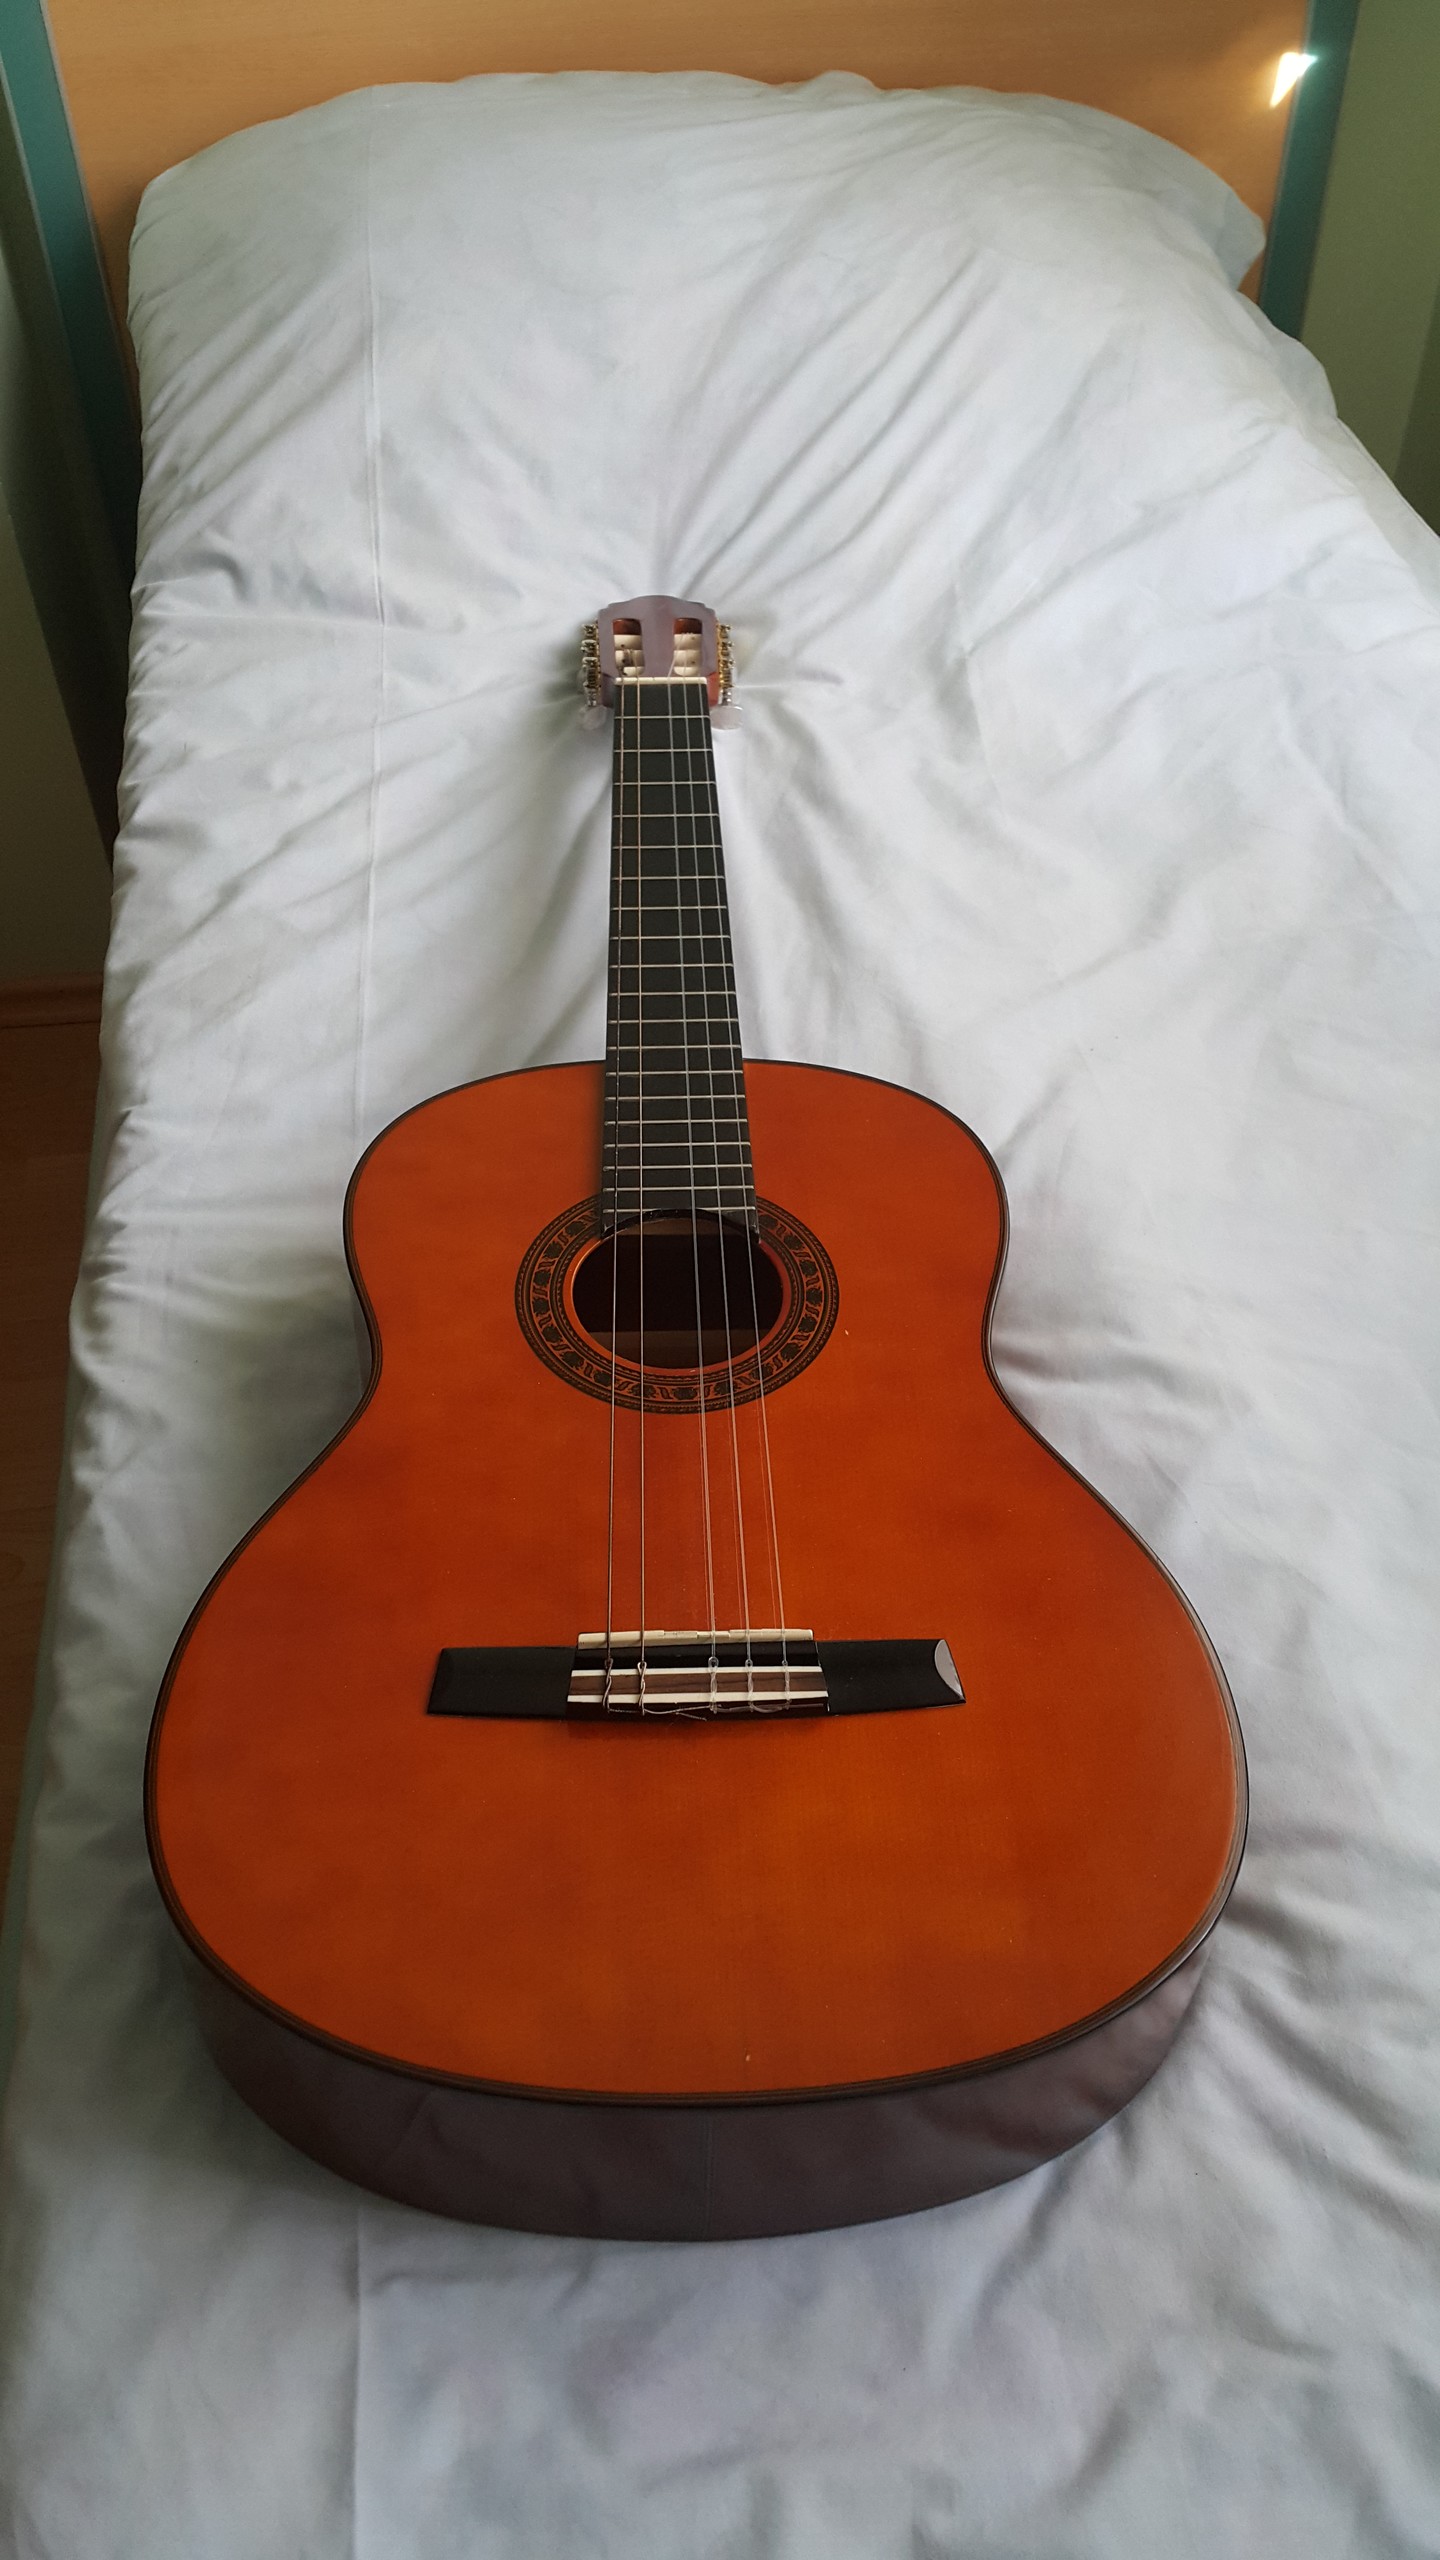  SATILIK Valencia CG180 Klasik gitar (170TL)